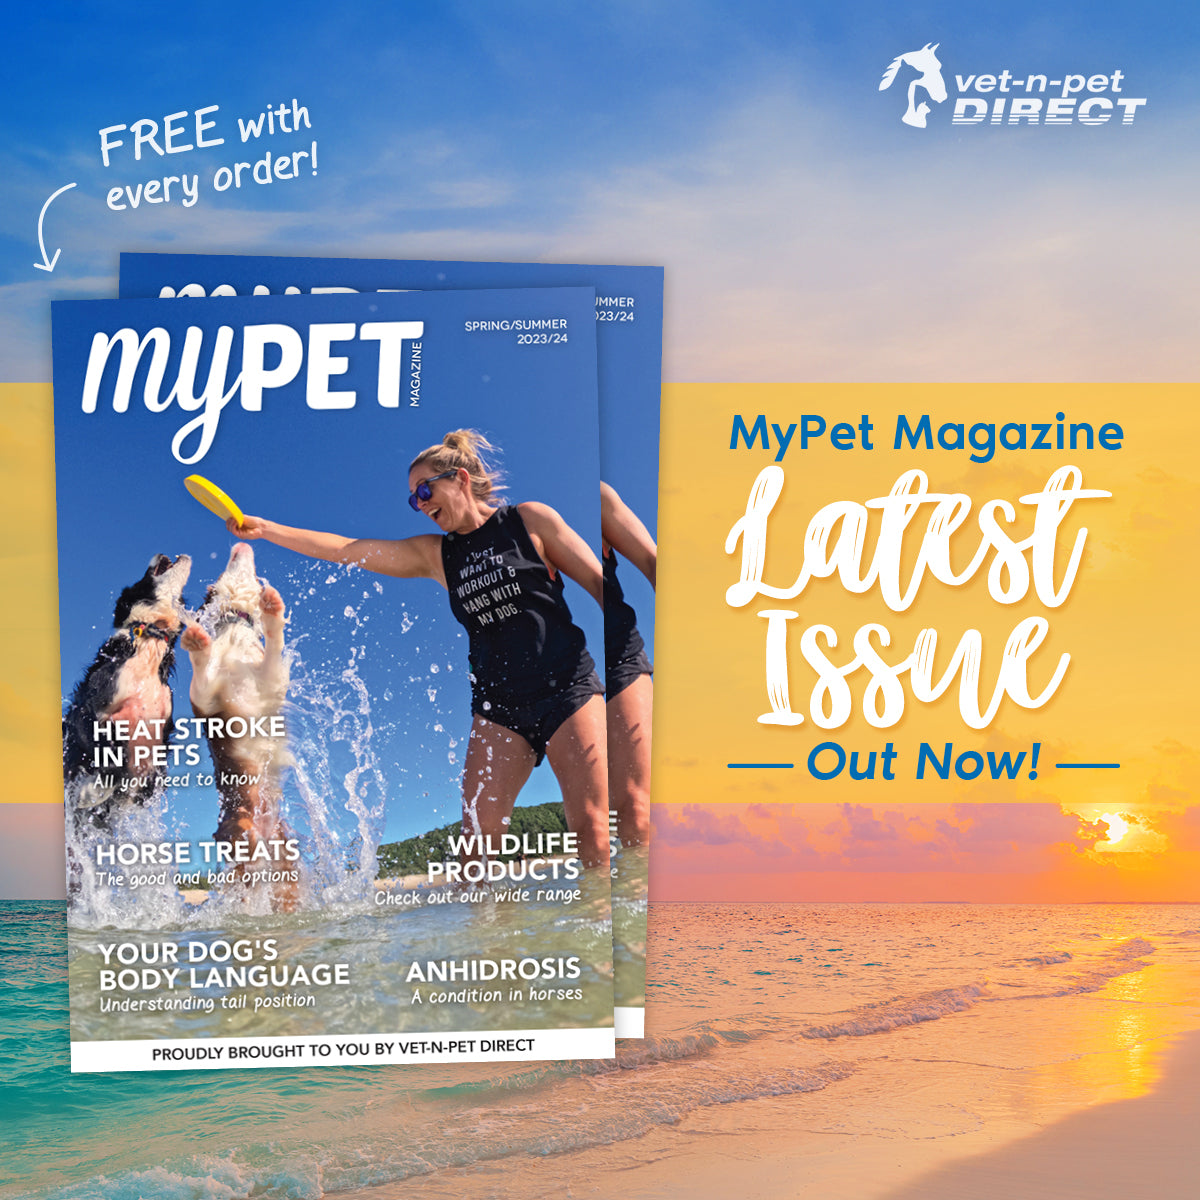 myPET Magazine Latest Issue